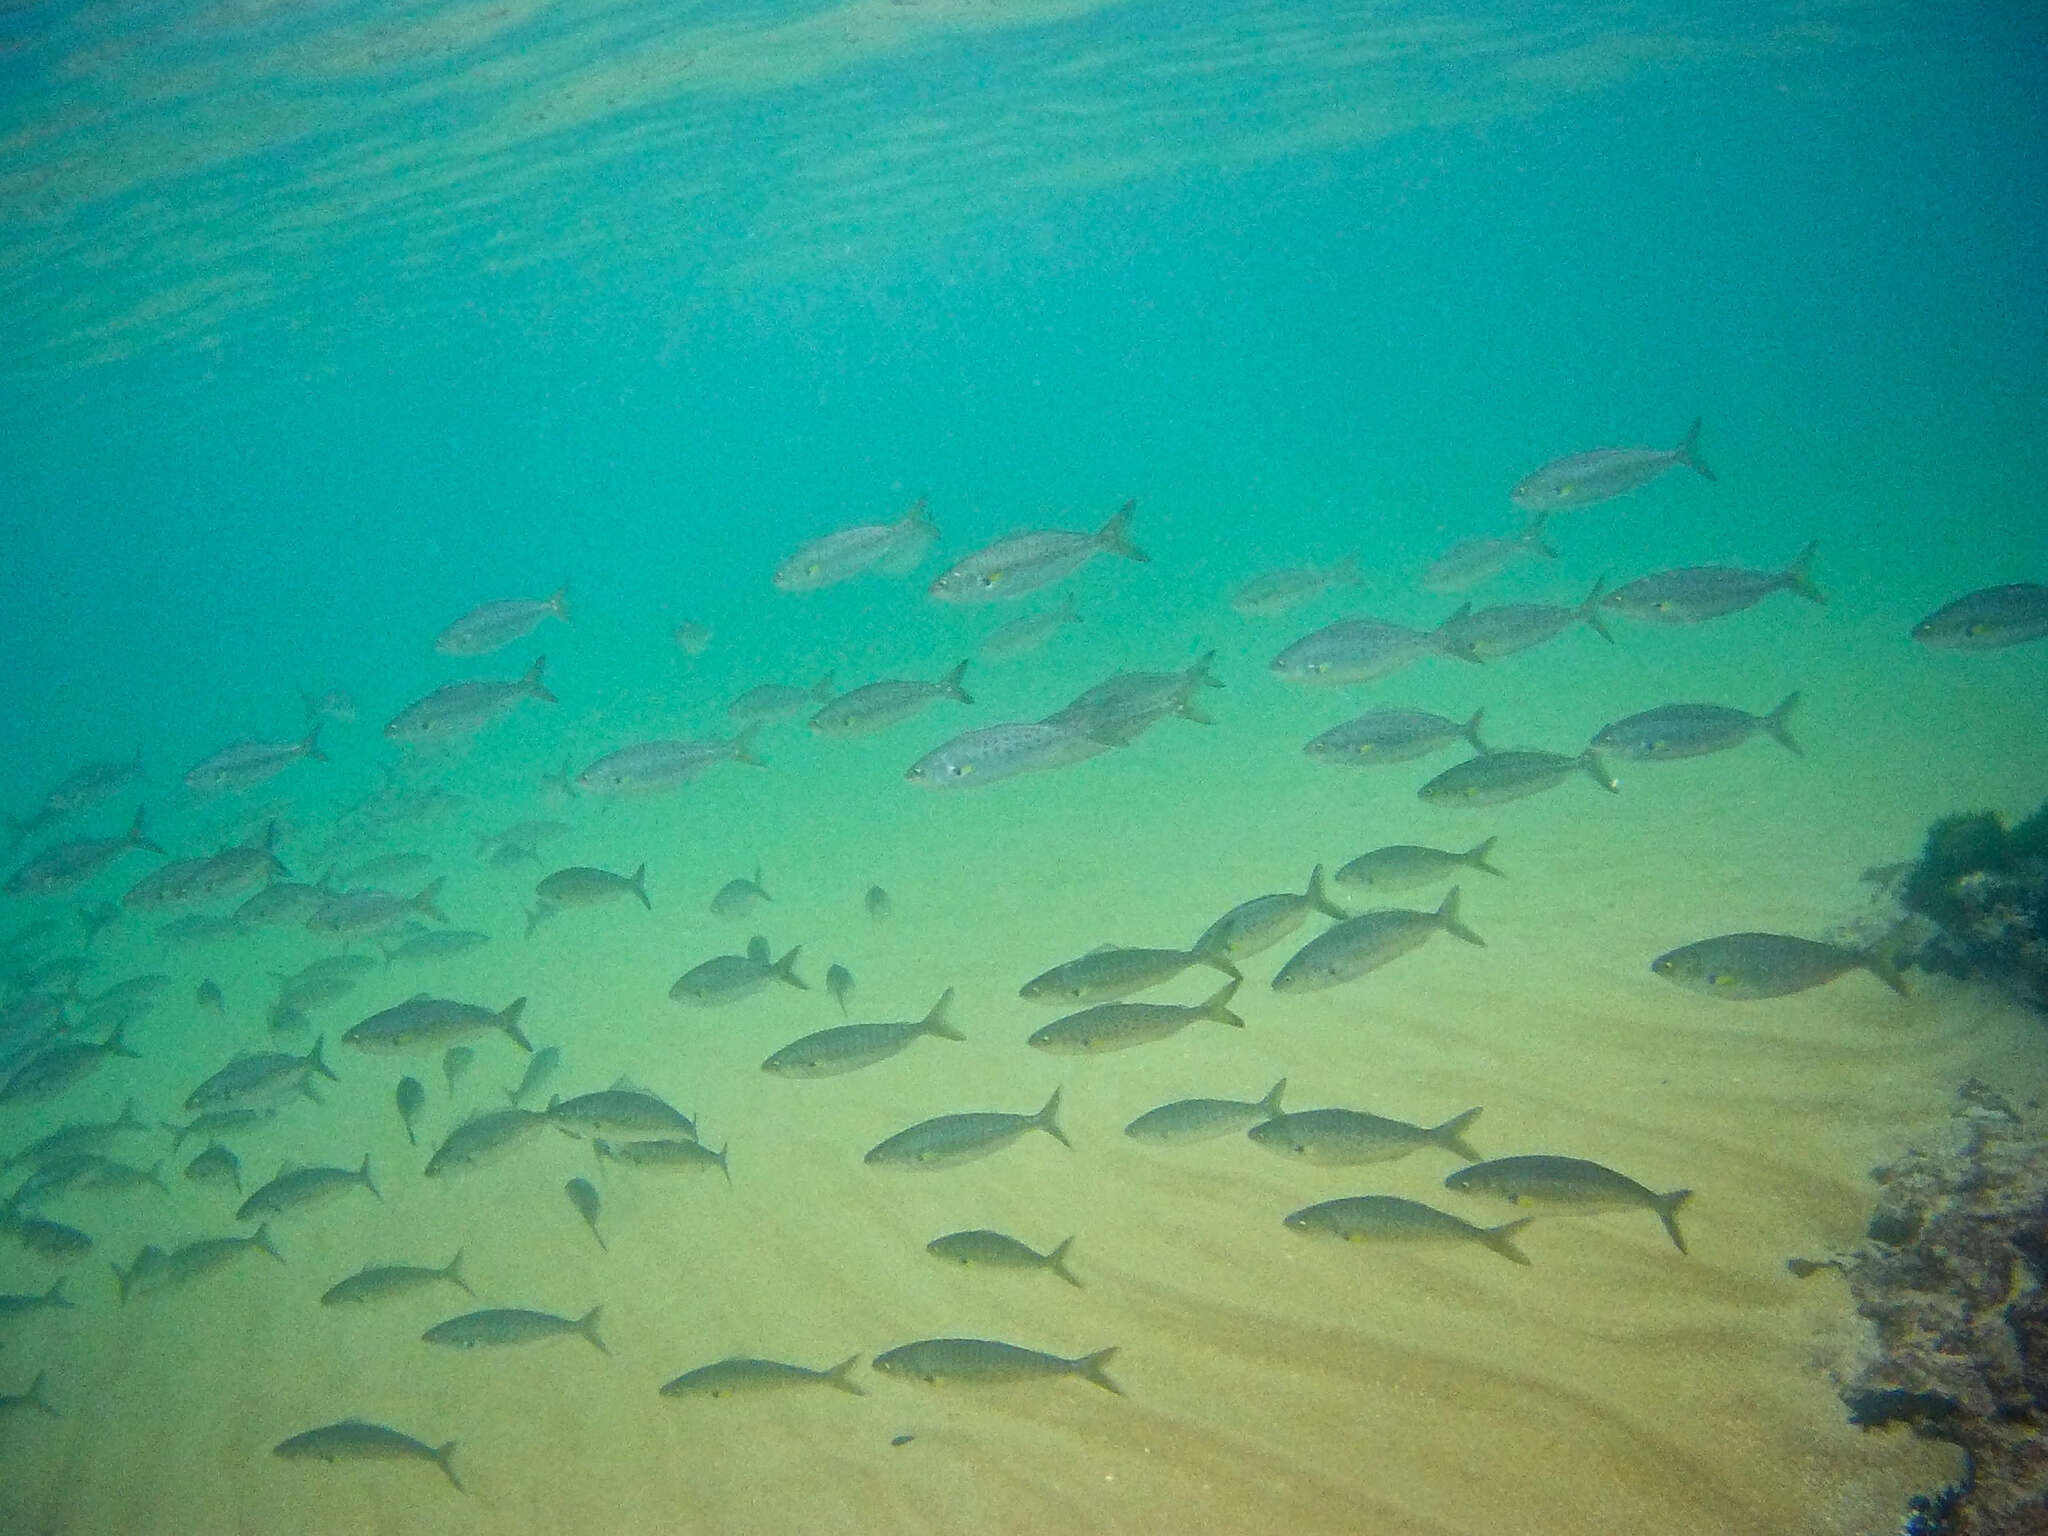 Image of Western Australian salmon